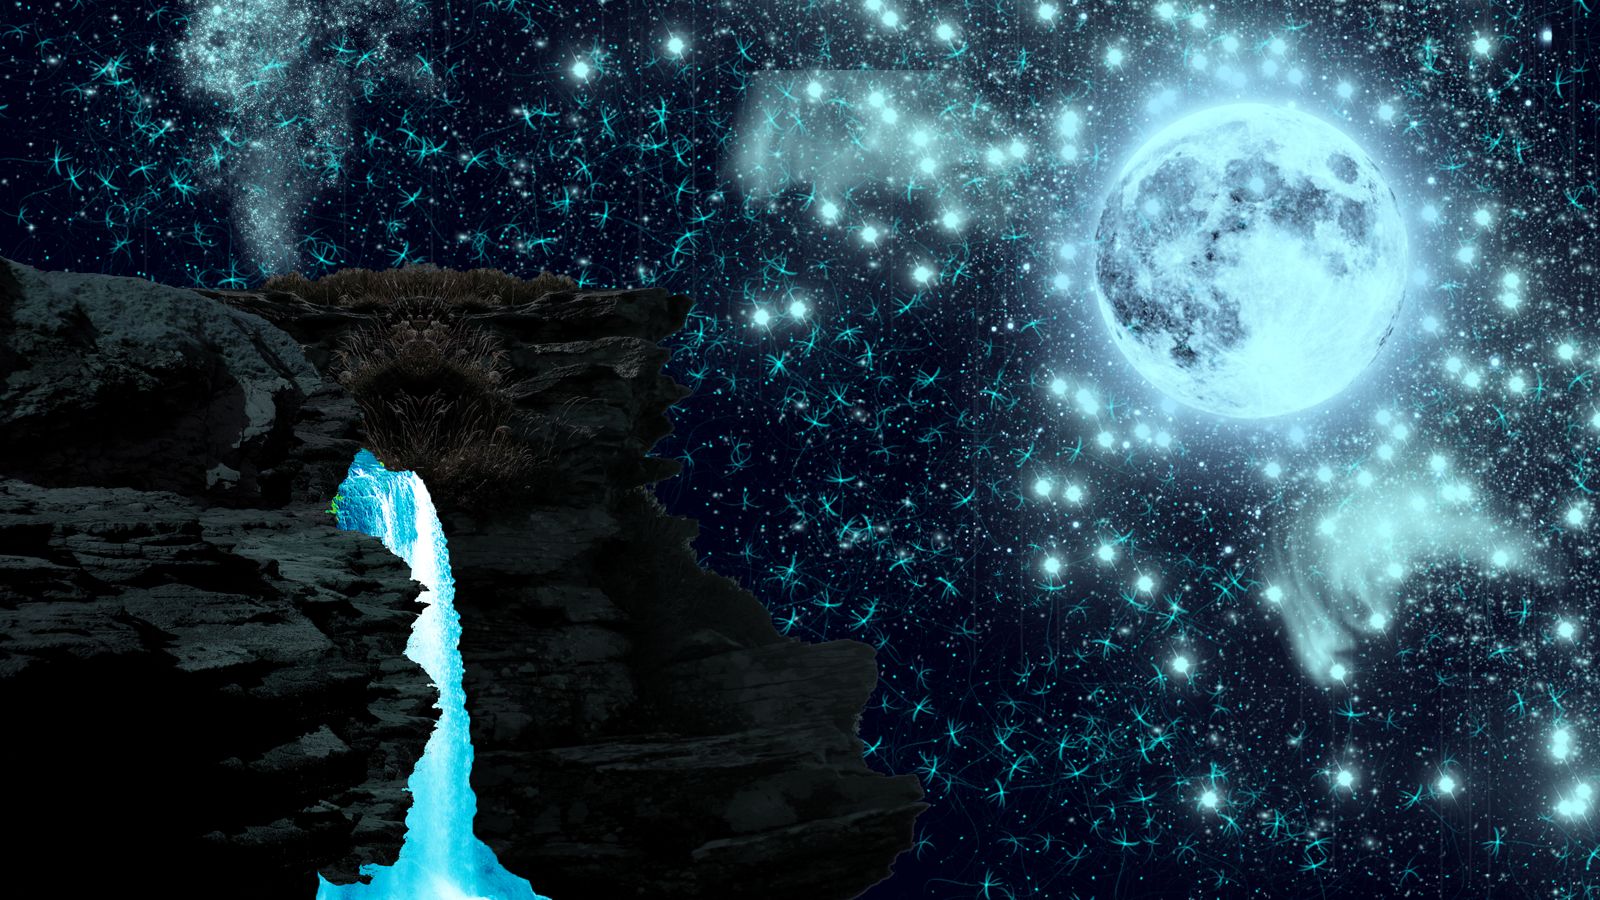 Moonlit Waterfall Background By Kazenoshun